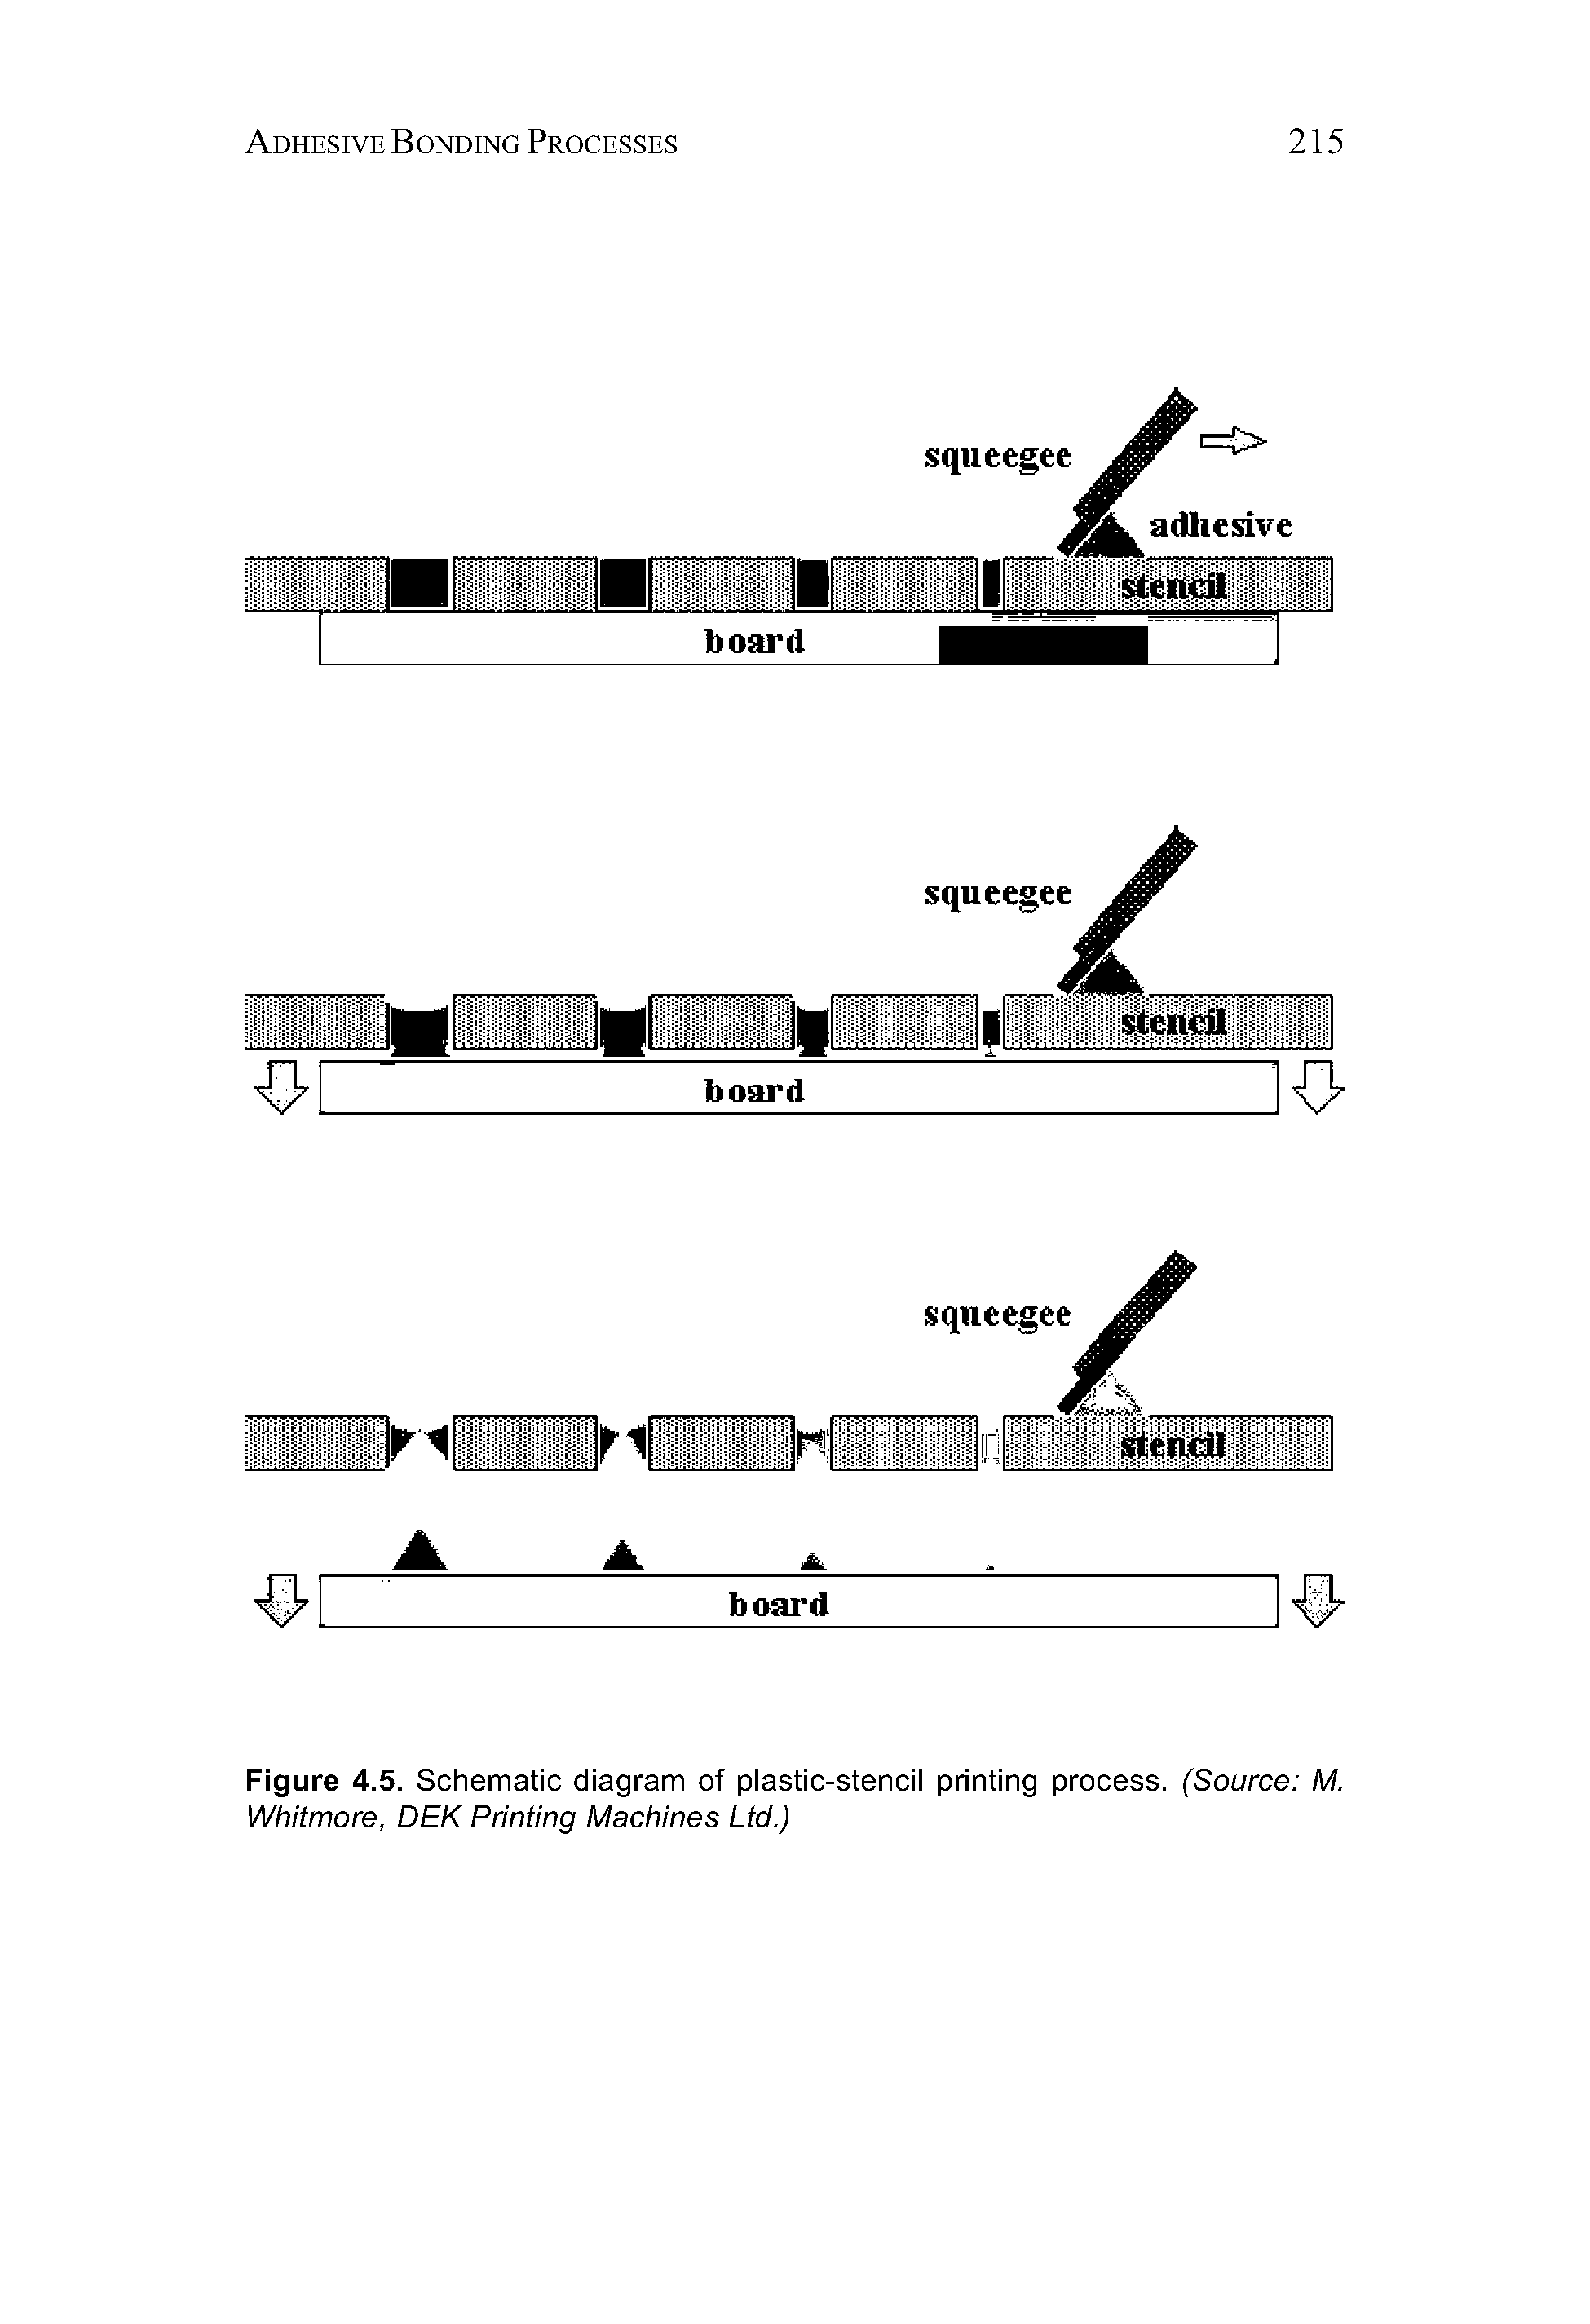 Figure 4.5. Schematic diagram of plastic-stencil printing process. (Source M. Whitmore, DEK Printing Machines Ltd.)...